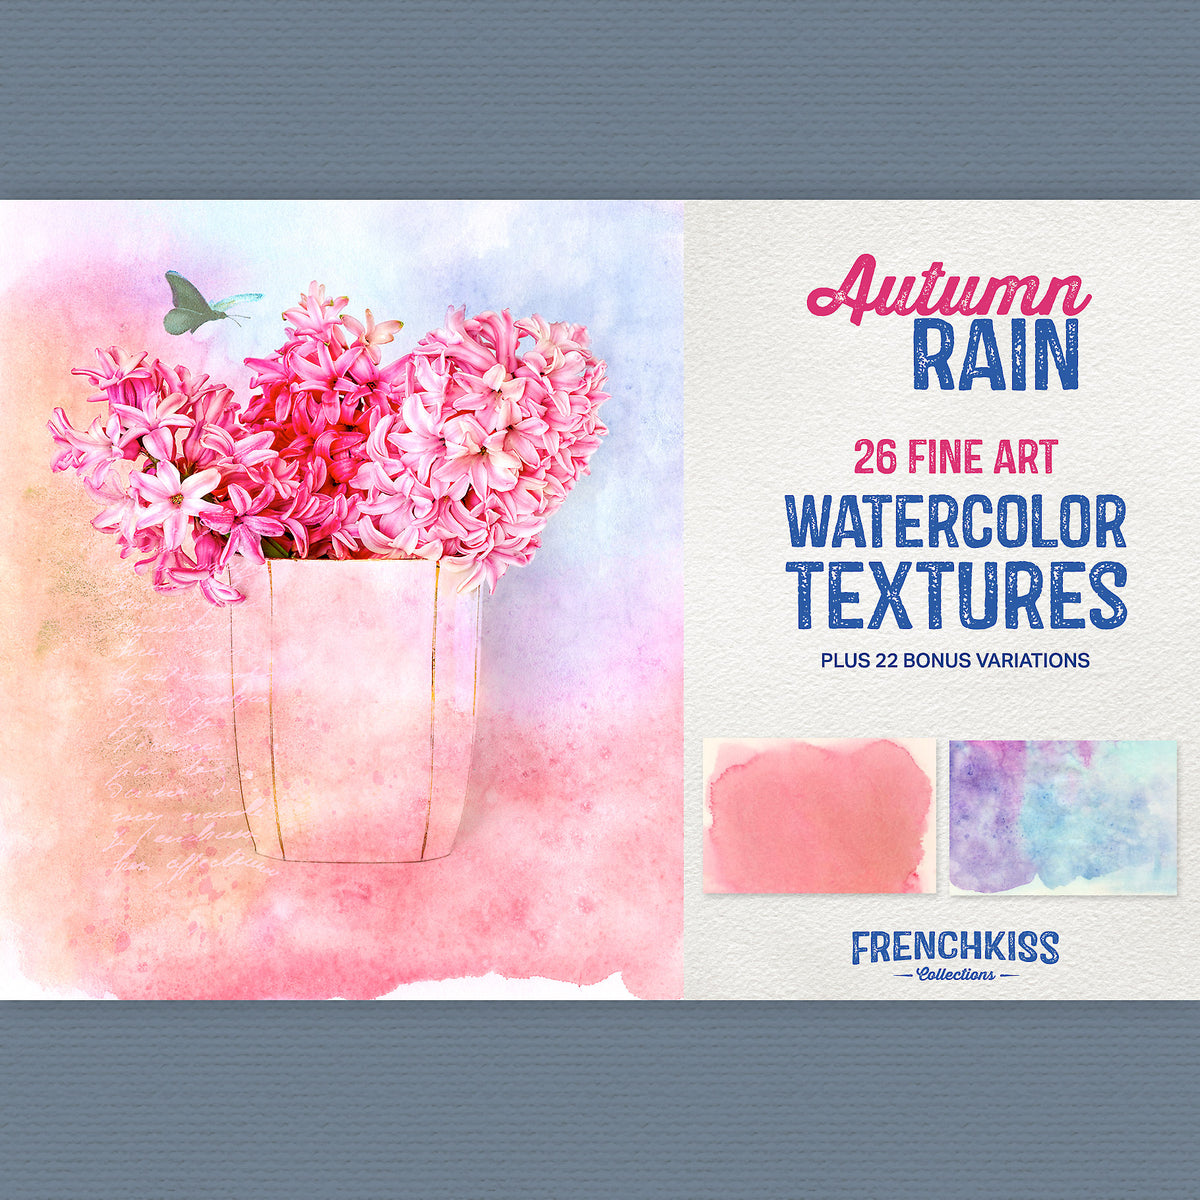 Autumn Rain fine art watercolor textures for commercial use.